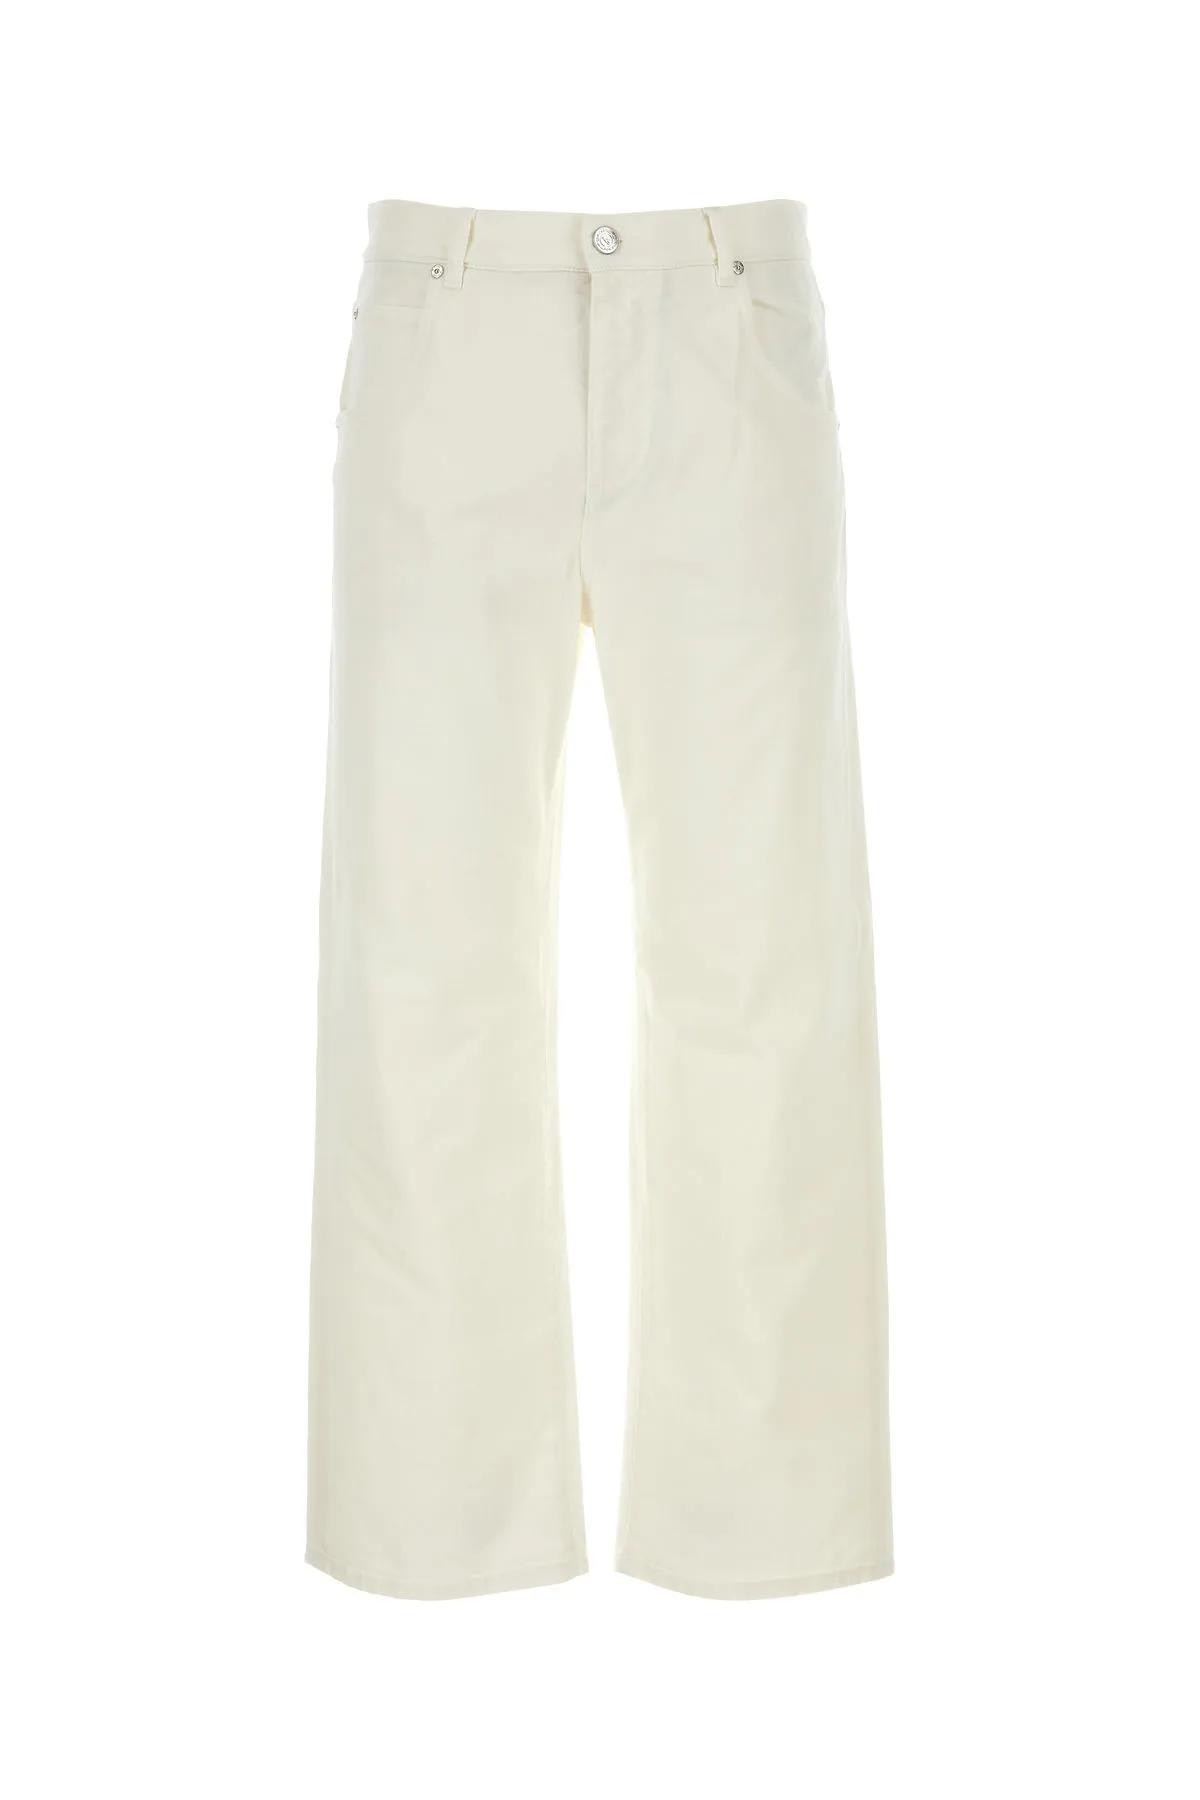 Shop Etro Ivory Stretch Denim Jeans